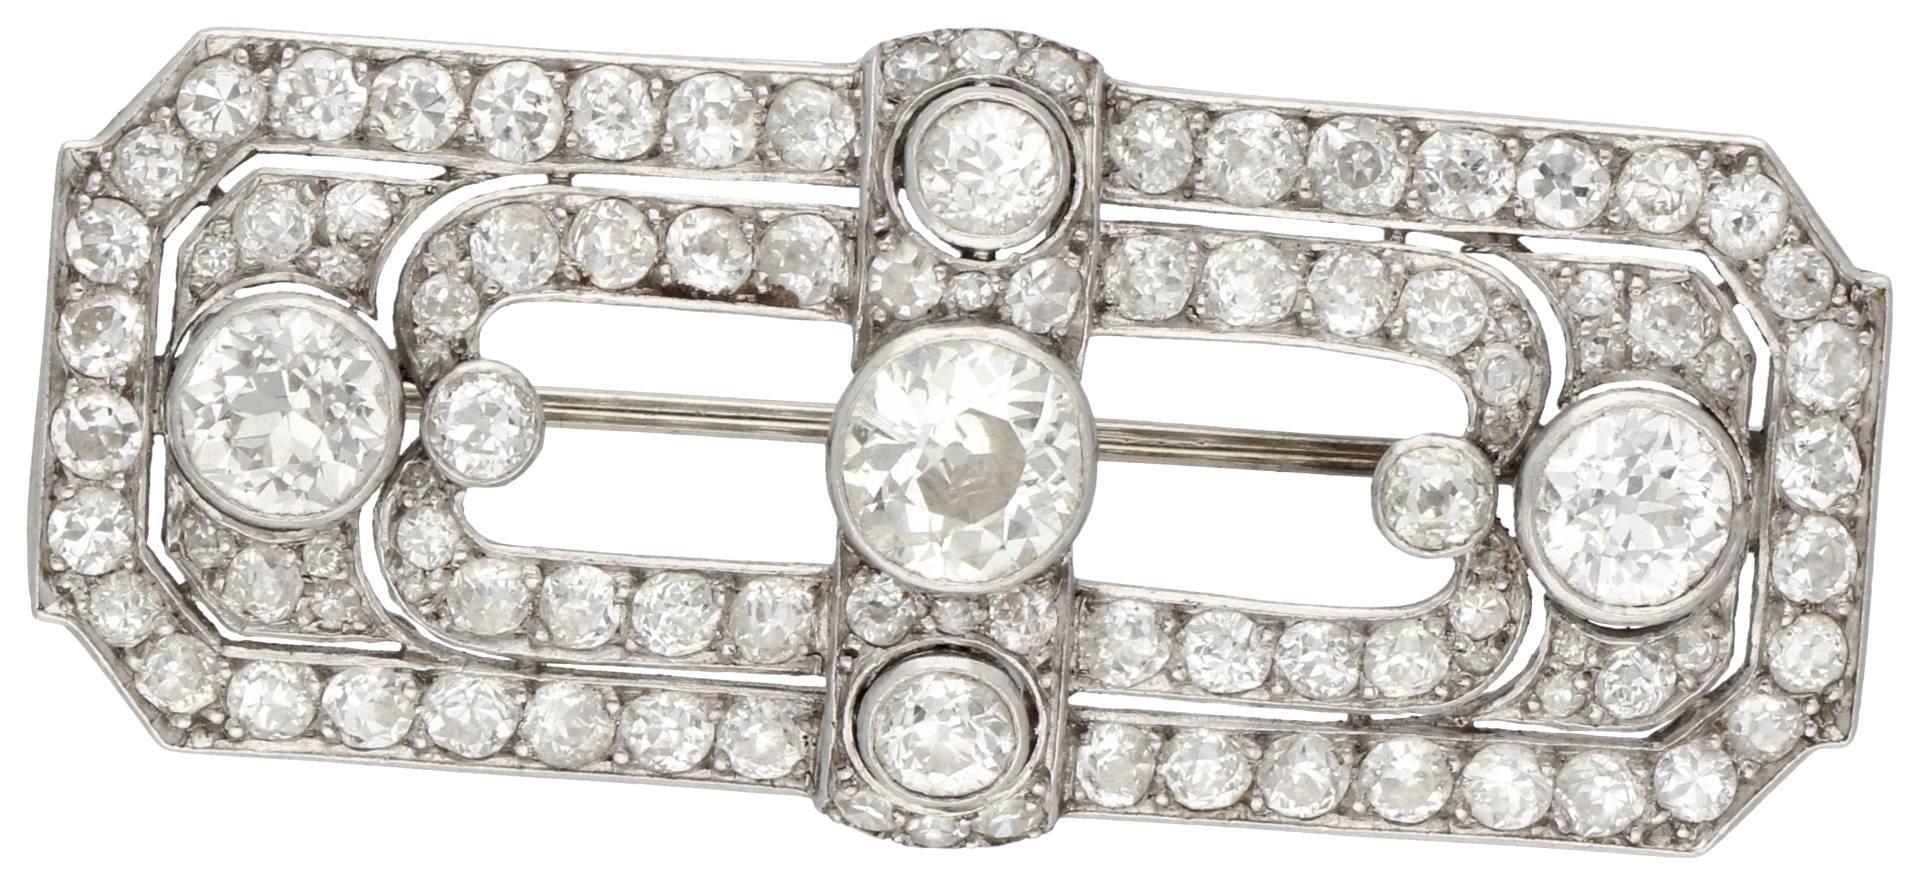 No Reserve - Platinum Art Deco brooch set with approx. 5.76 ct. diamond.